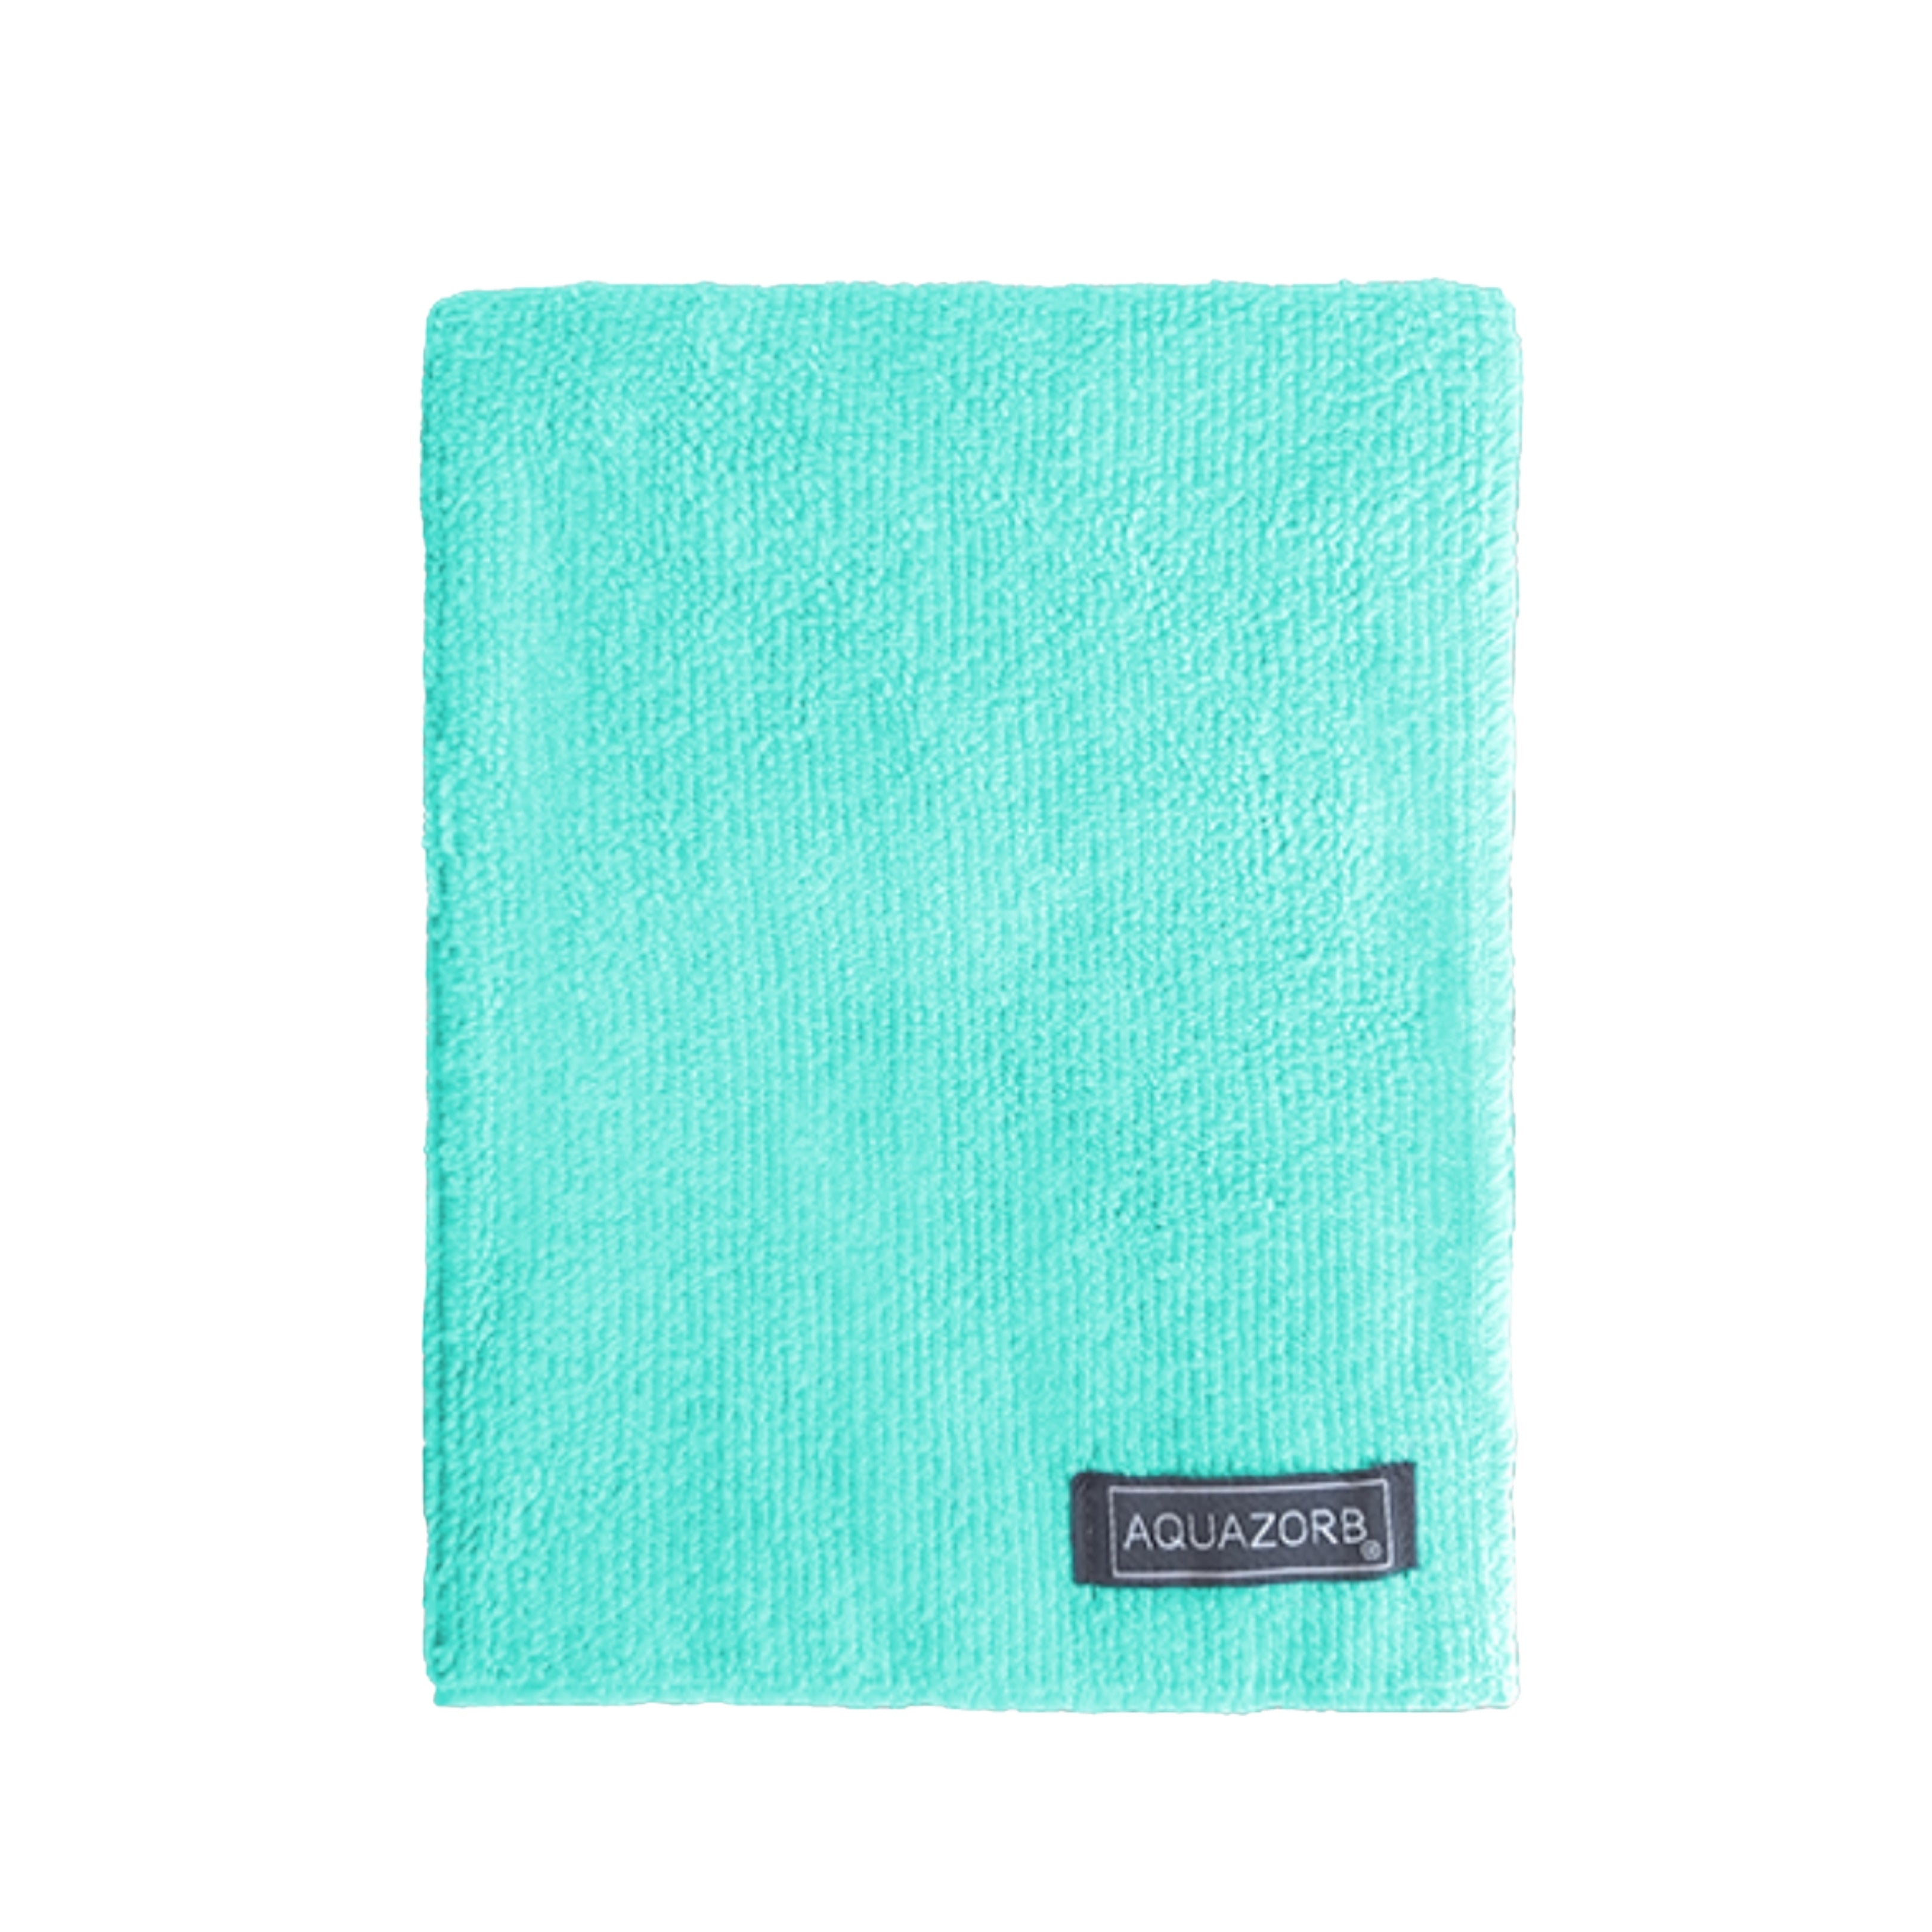 Aquazorb Body Bath Towel – EZ Home Ideas